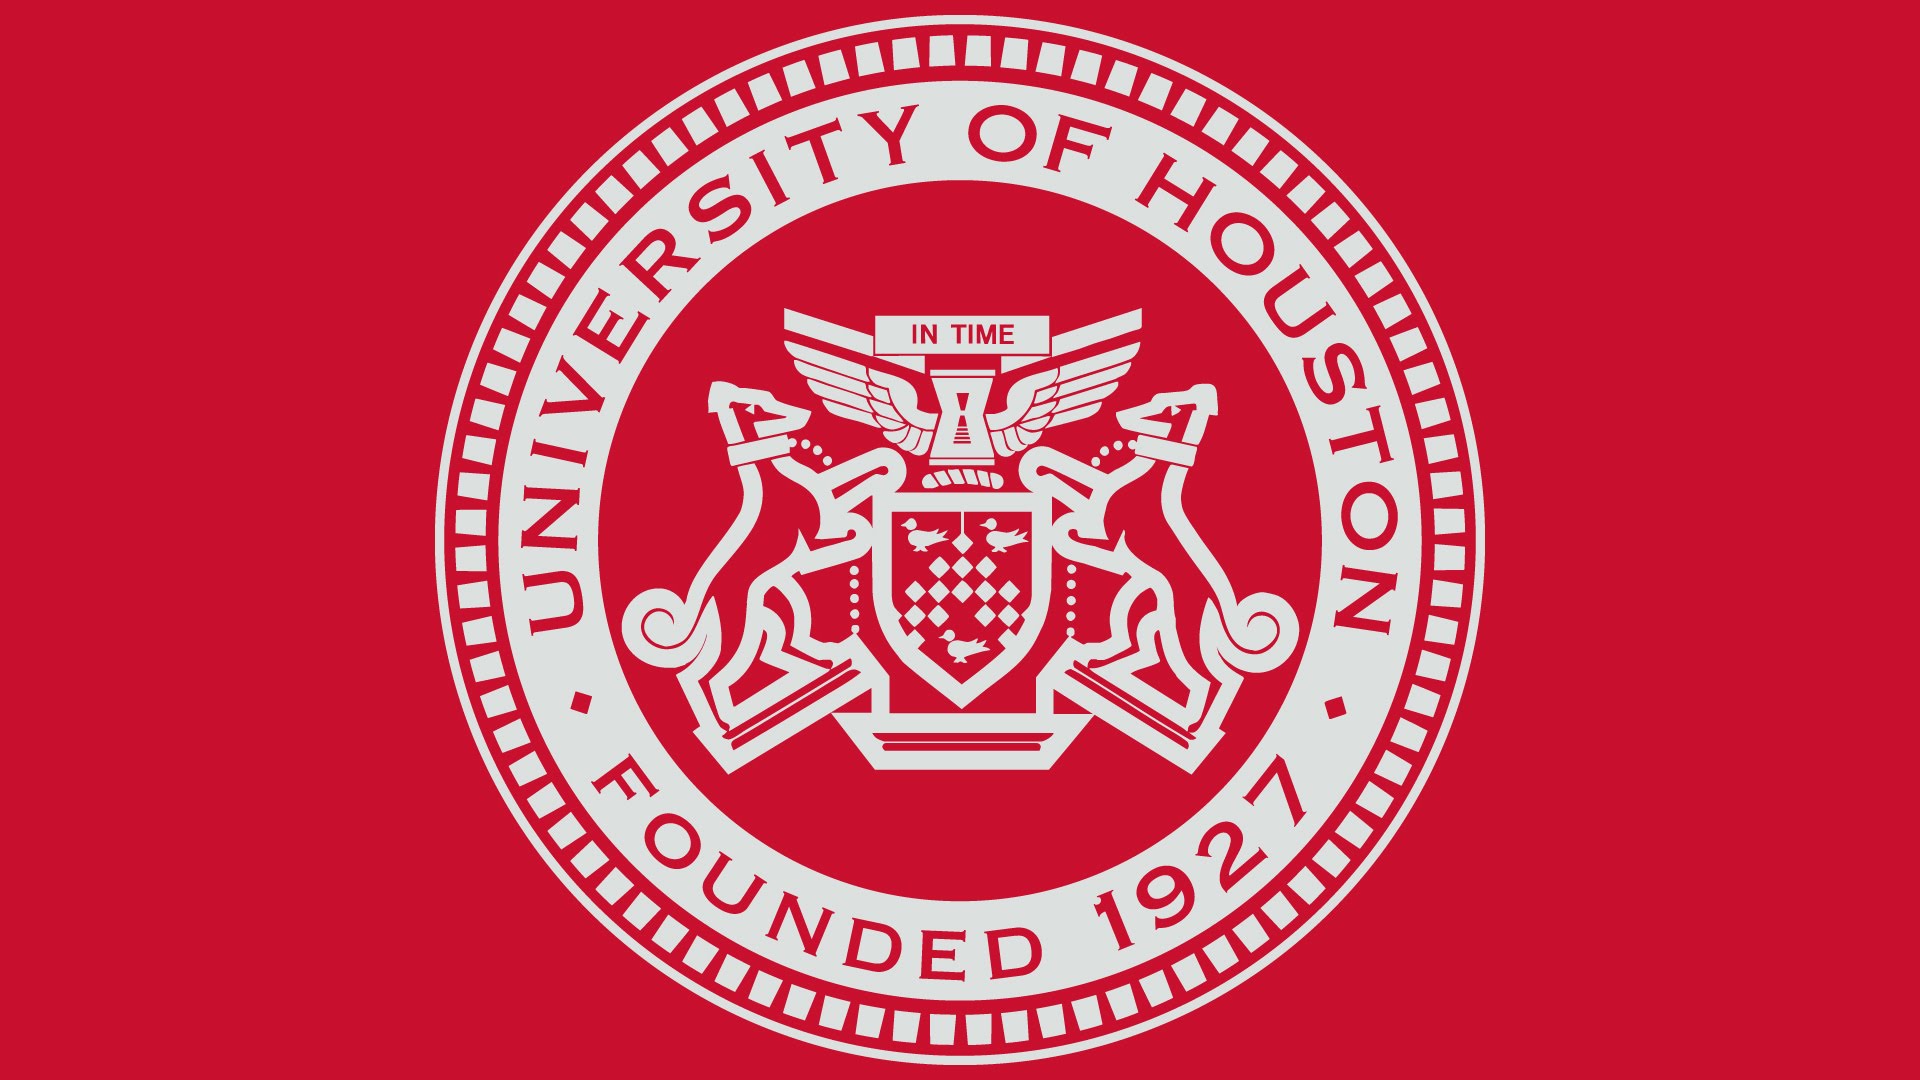 University of Houston 2015 Commencement Ceremony - YouTube